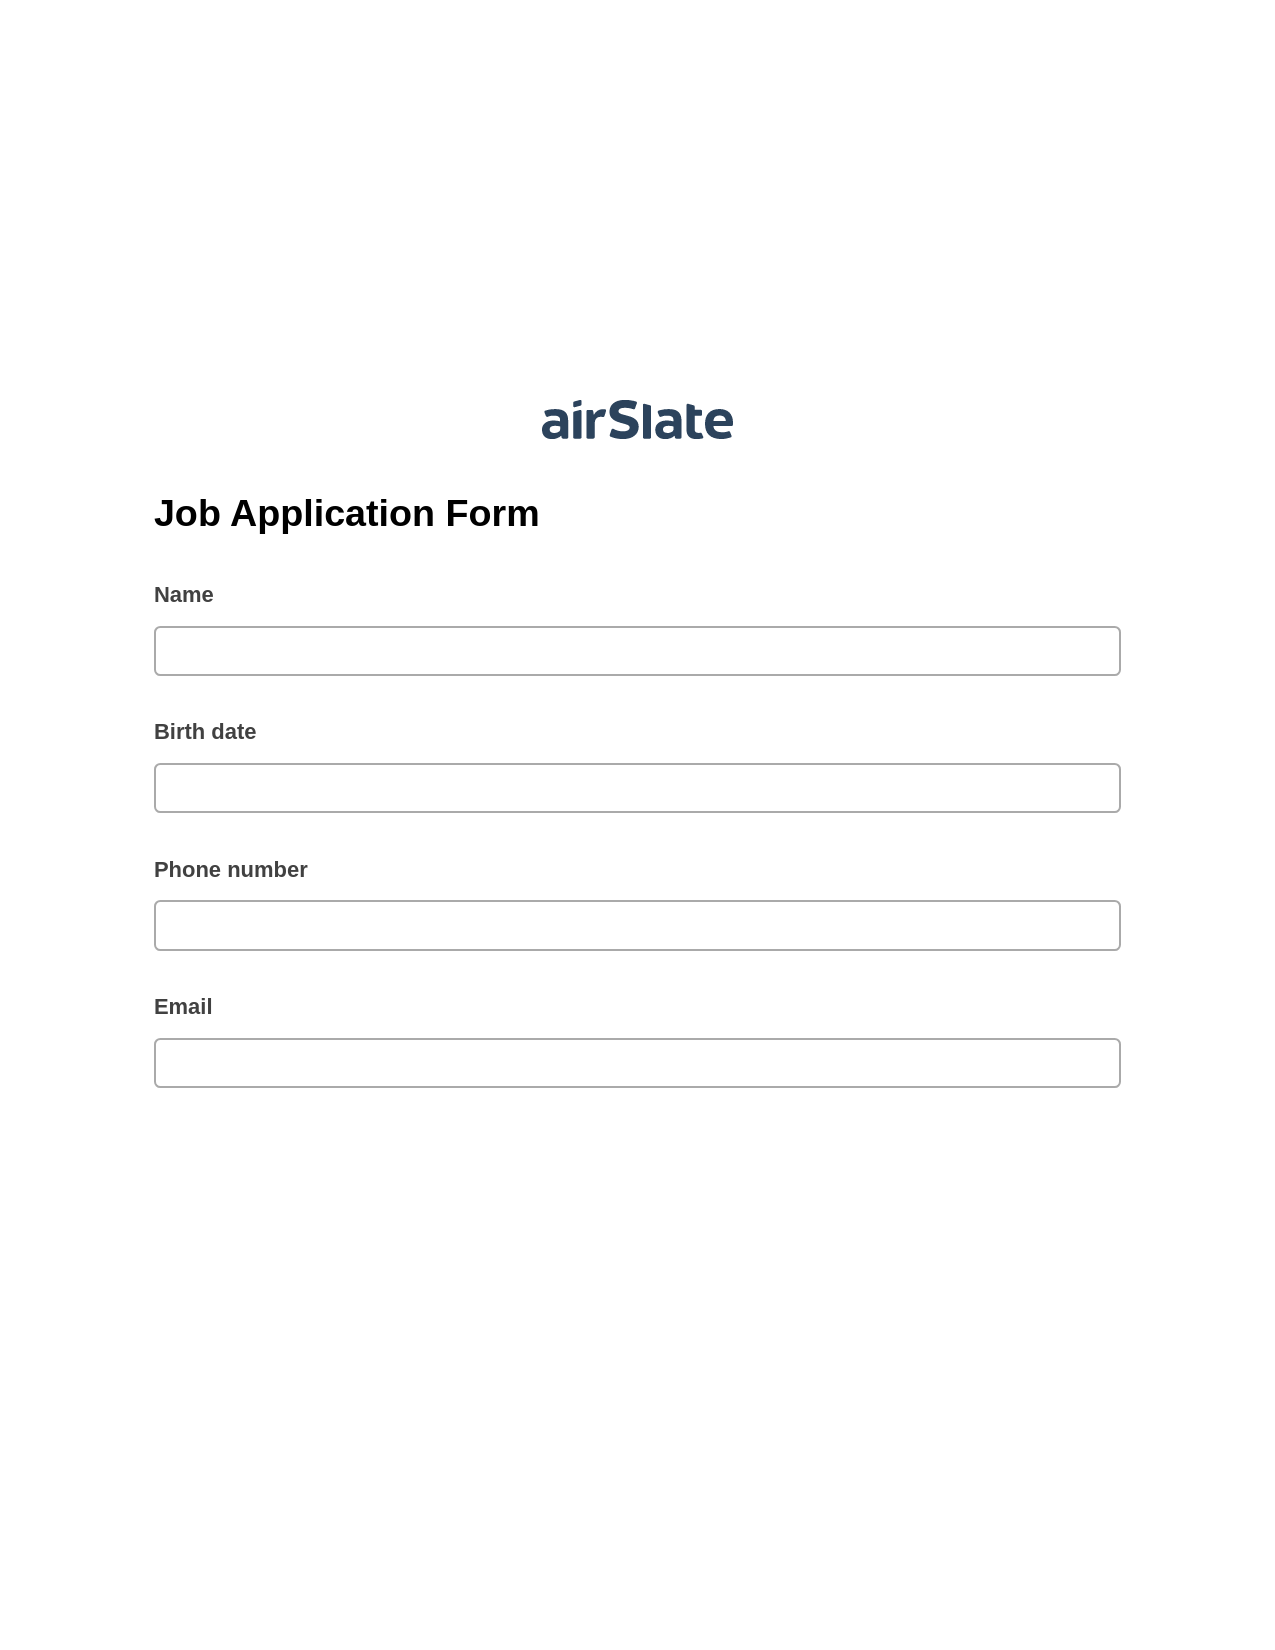 Job Application Form Pre-fill from MySQL Bot, Revoke Access Bot, Box Bot